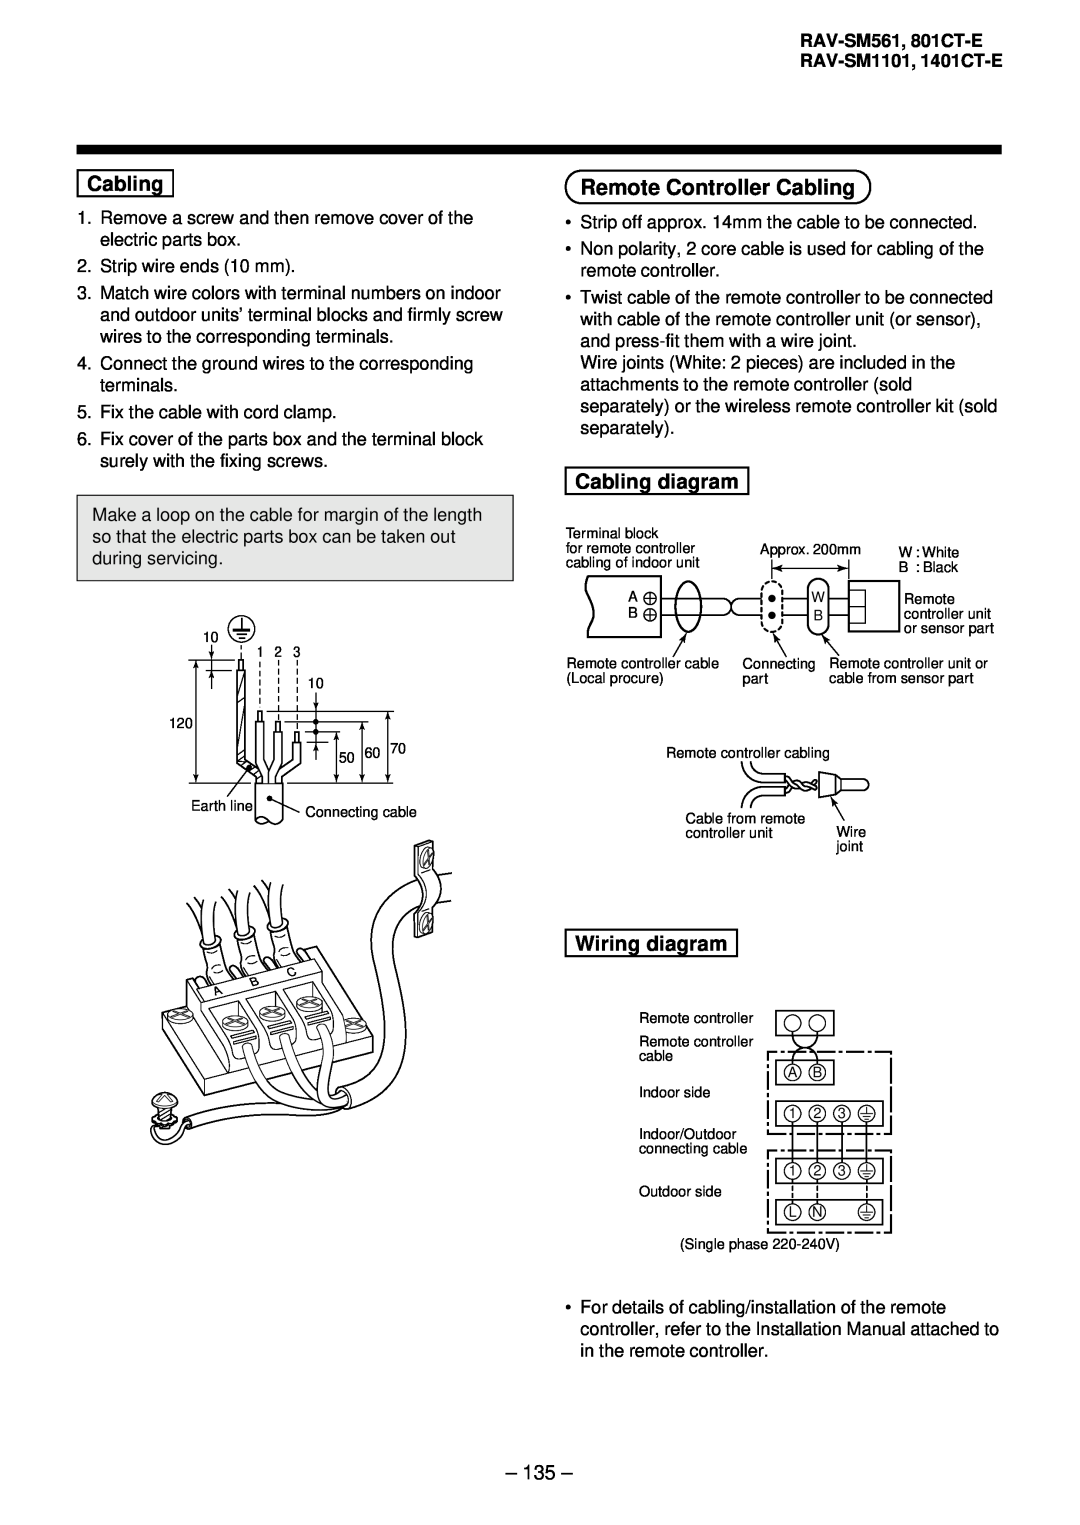 Balcar R410A service manual Remote Controller Cabling, Cabling diagram, Wiring diagram, 135 